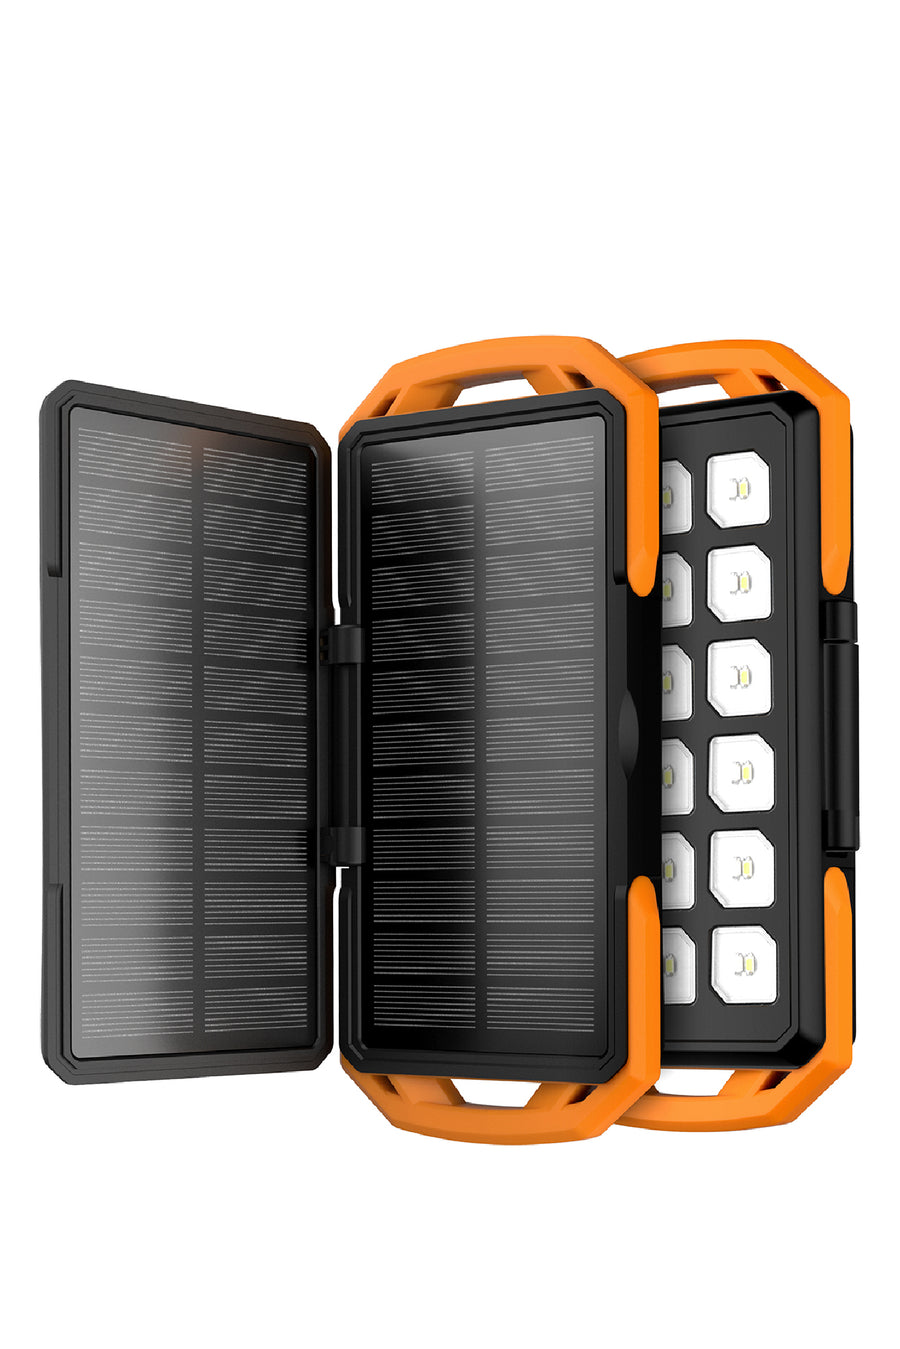 Dual 10,000 mAh Solar Charger IP65 Waterproof Portable Power Bank